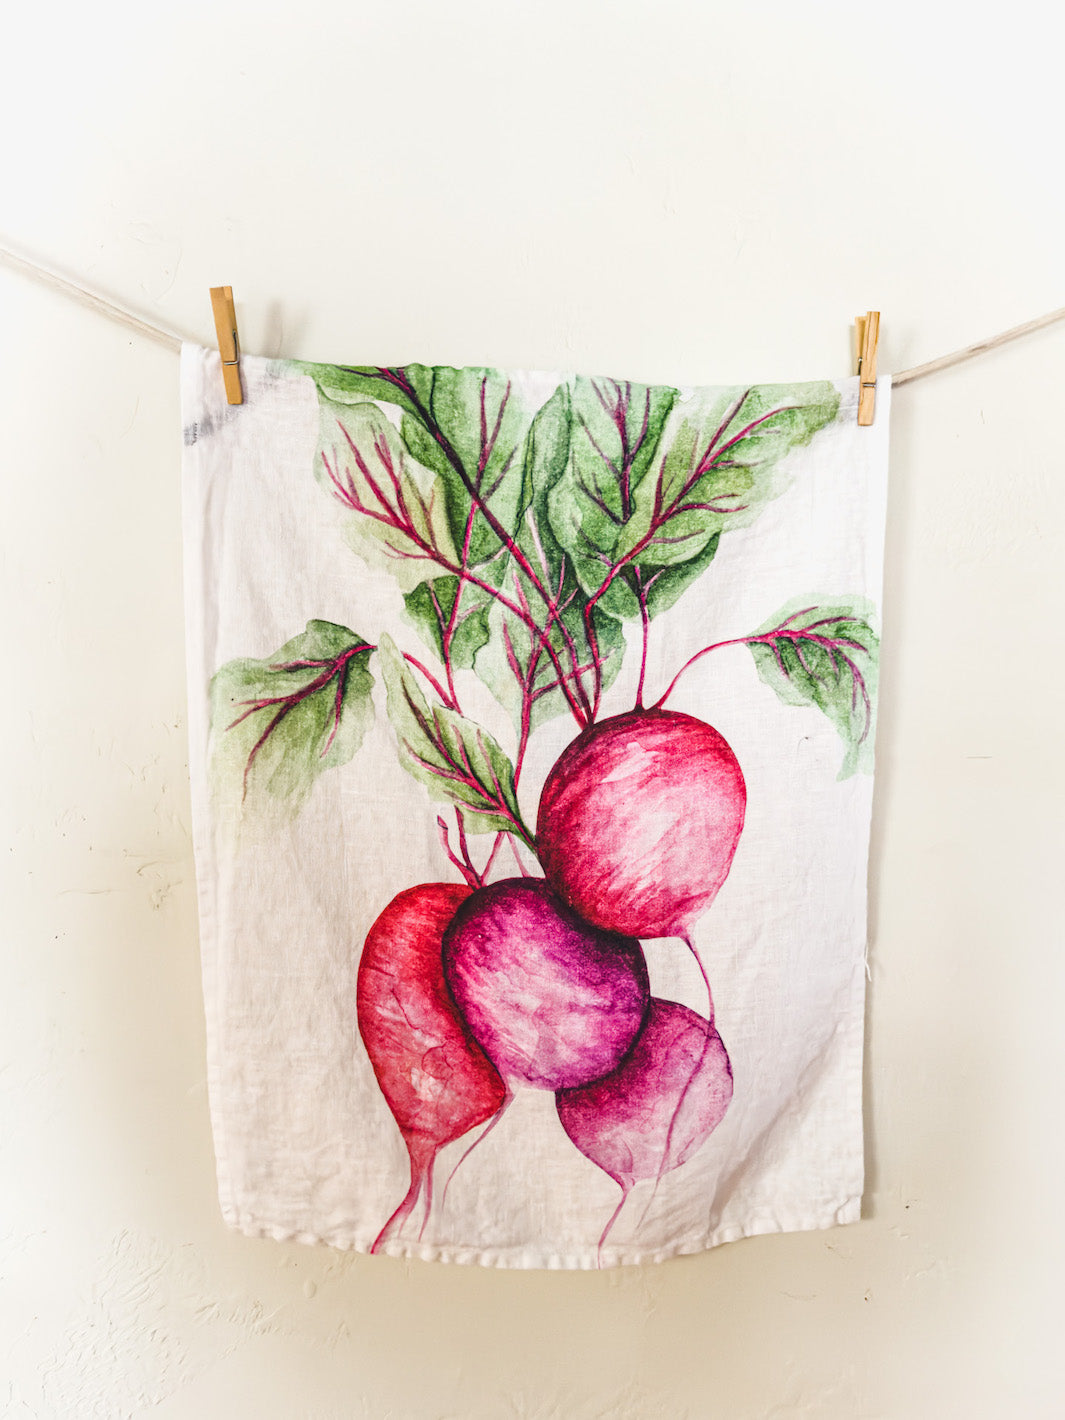 Verdure (Veggie) Kitchen Towel Collection